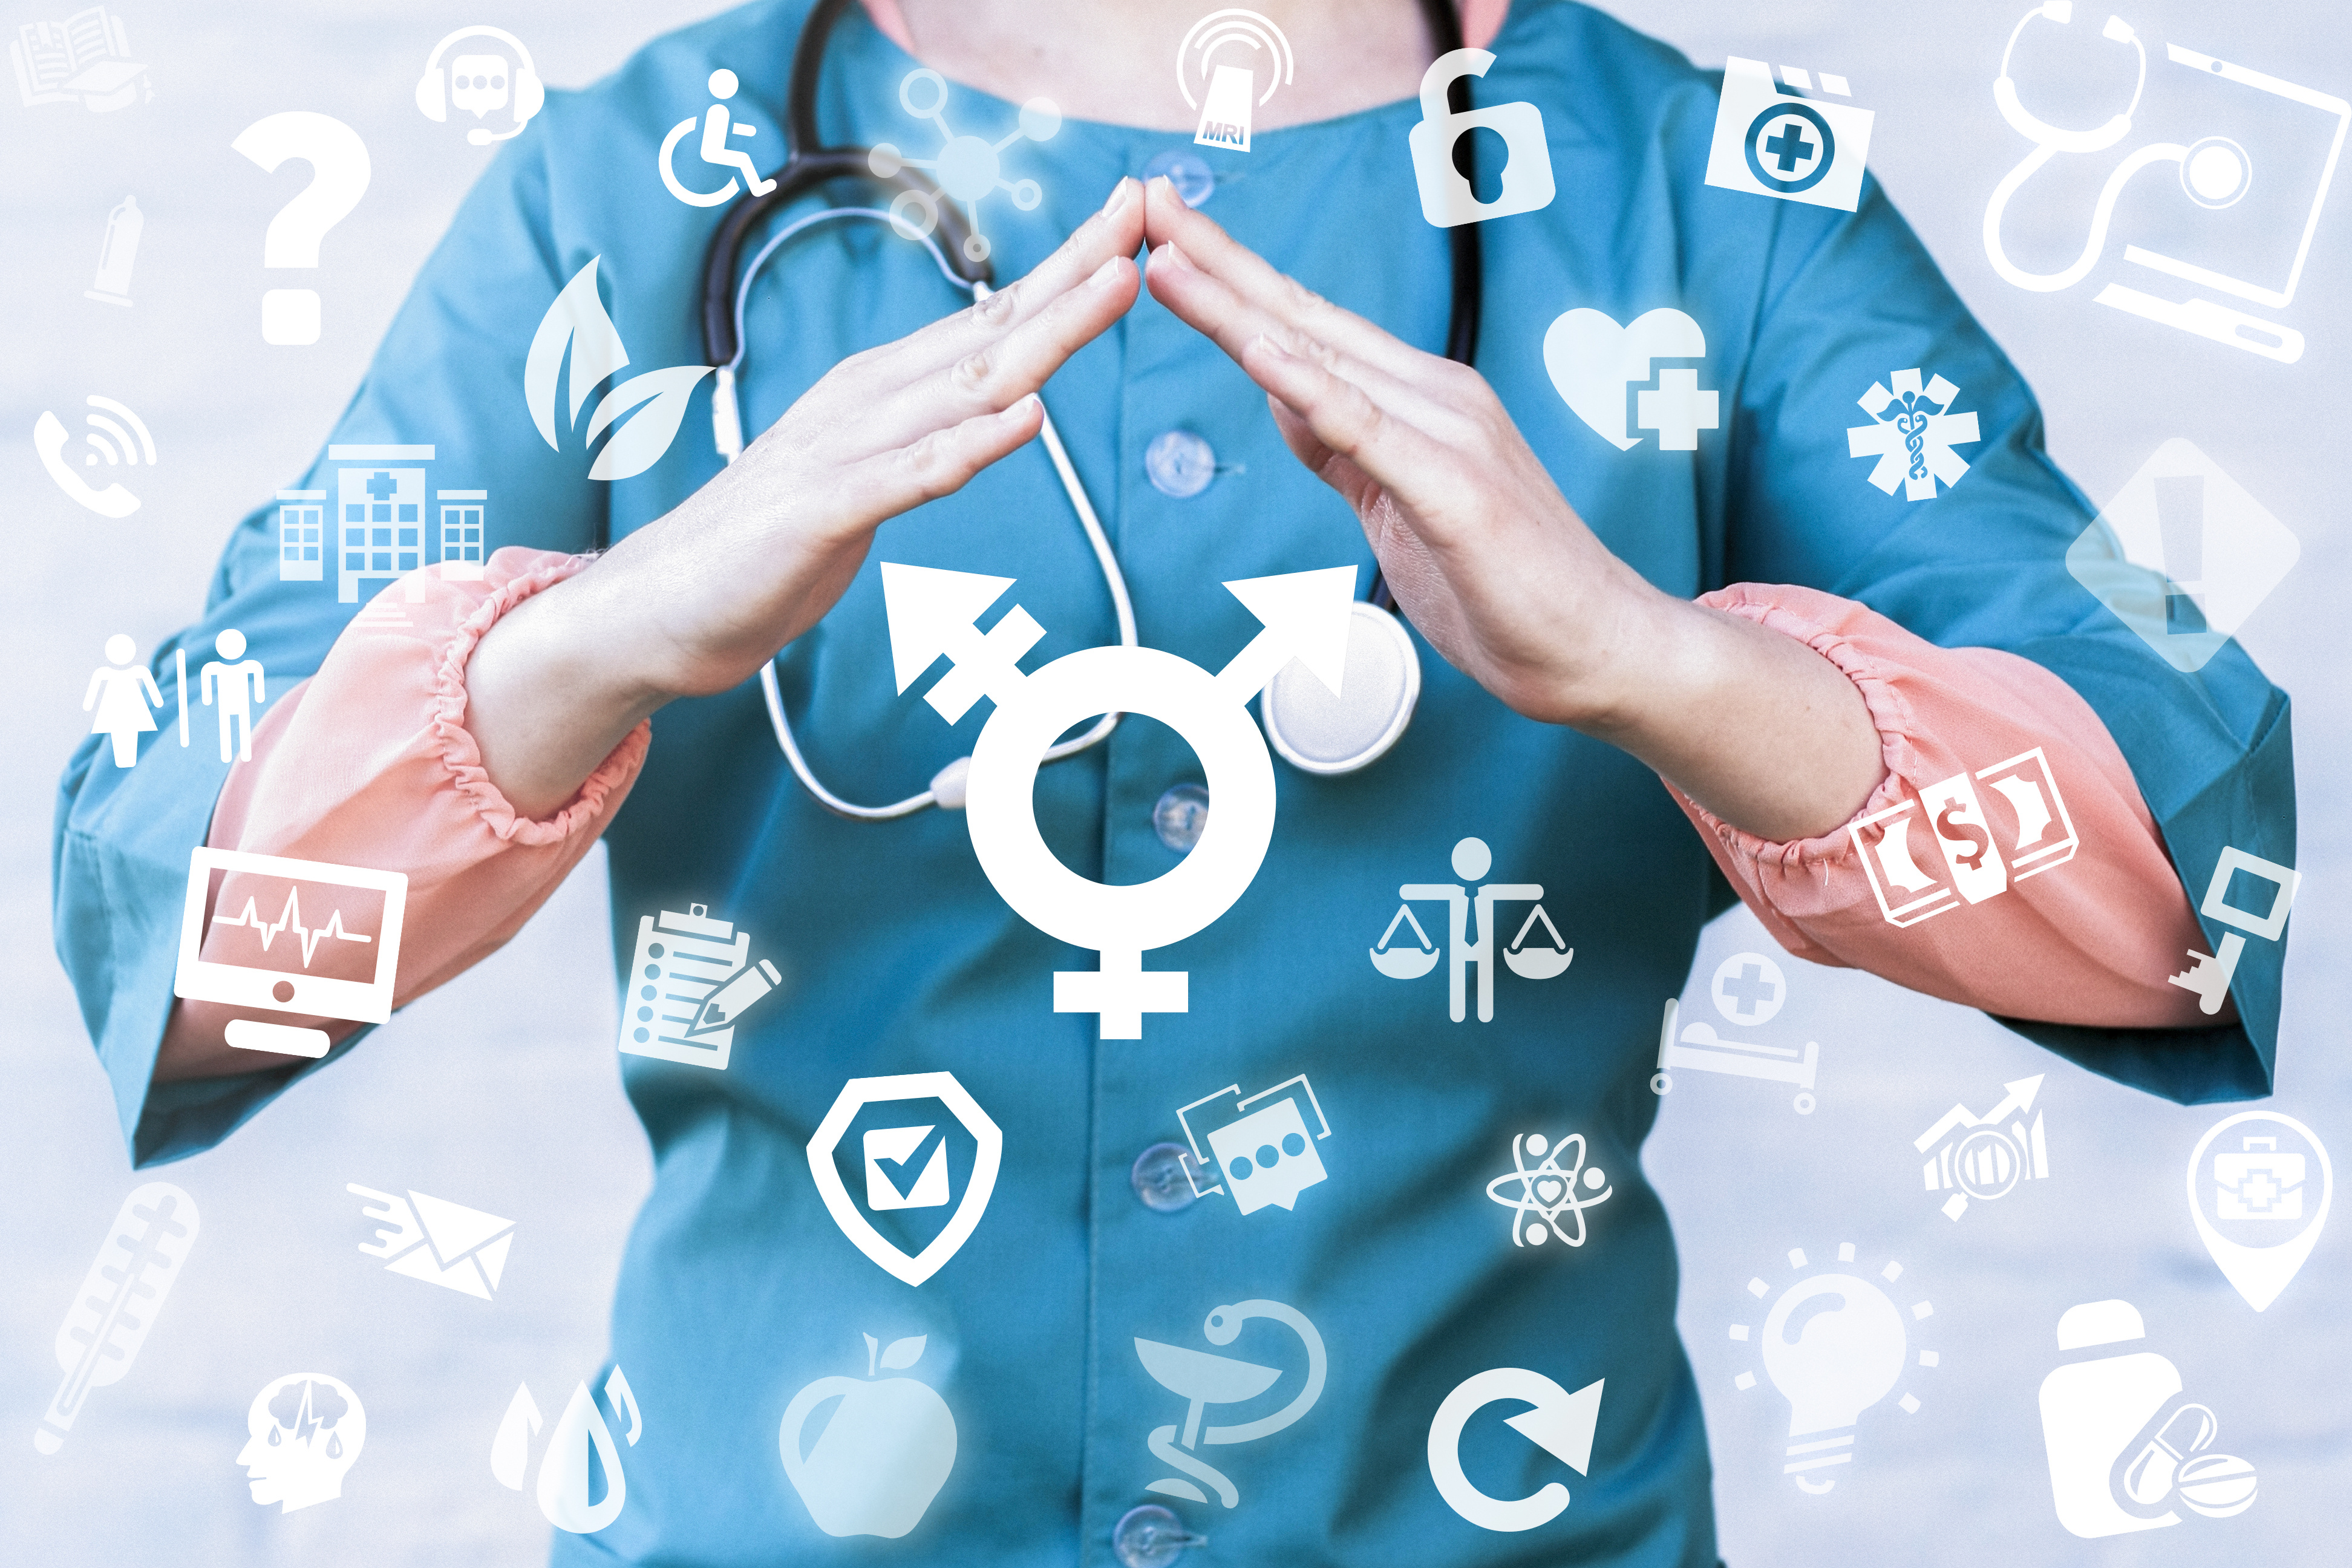 Doctor holds roof hands over transgender (combining gender) symbol on a virtual digital screen interface